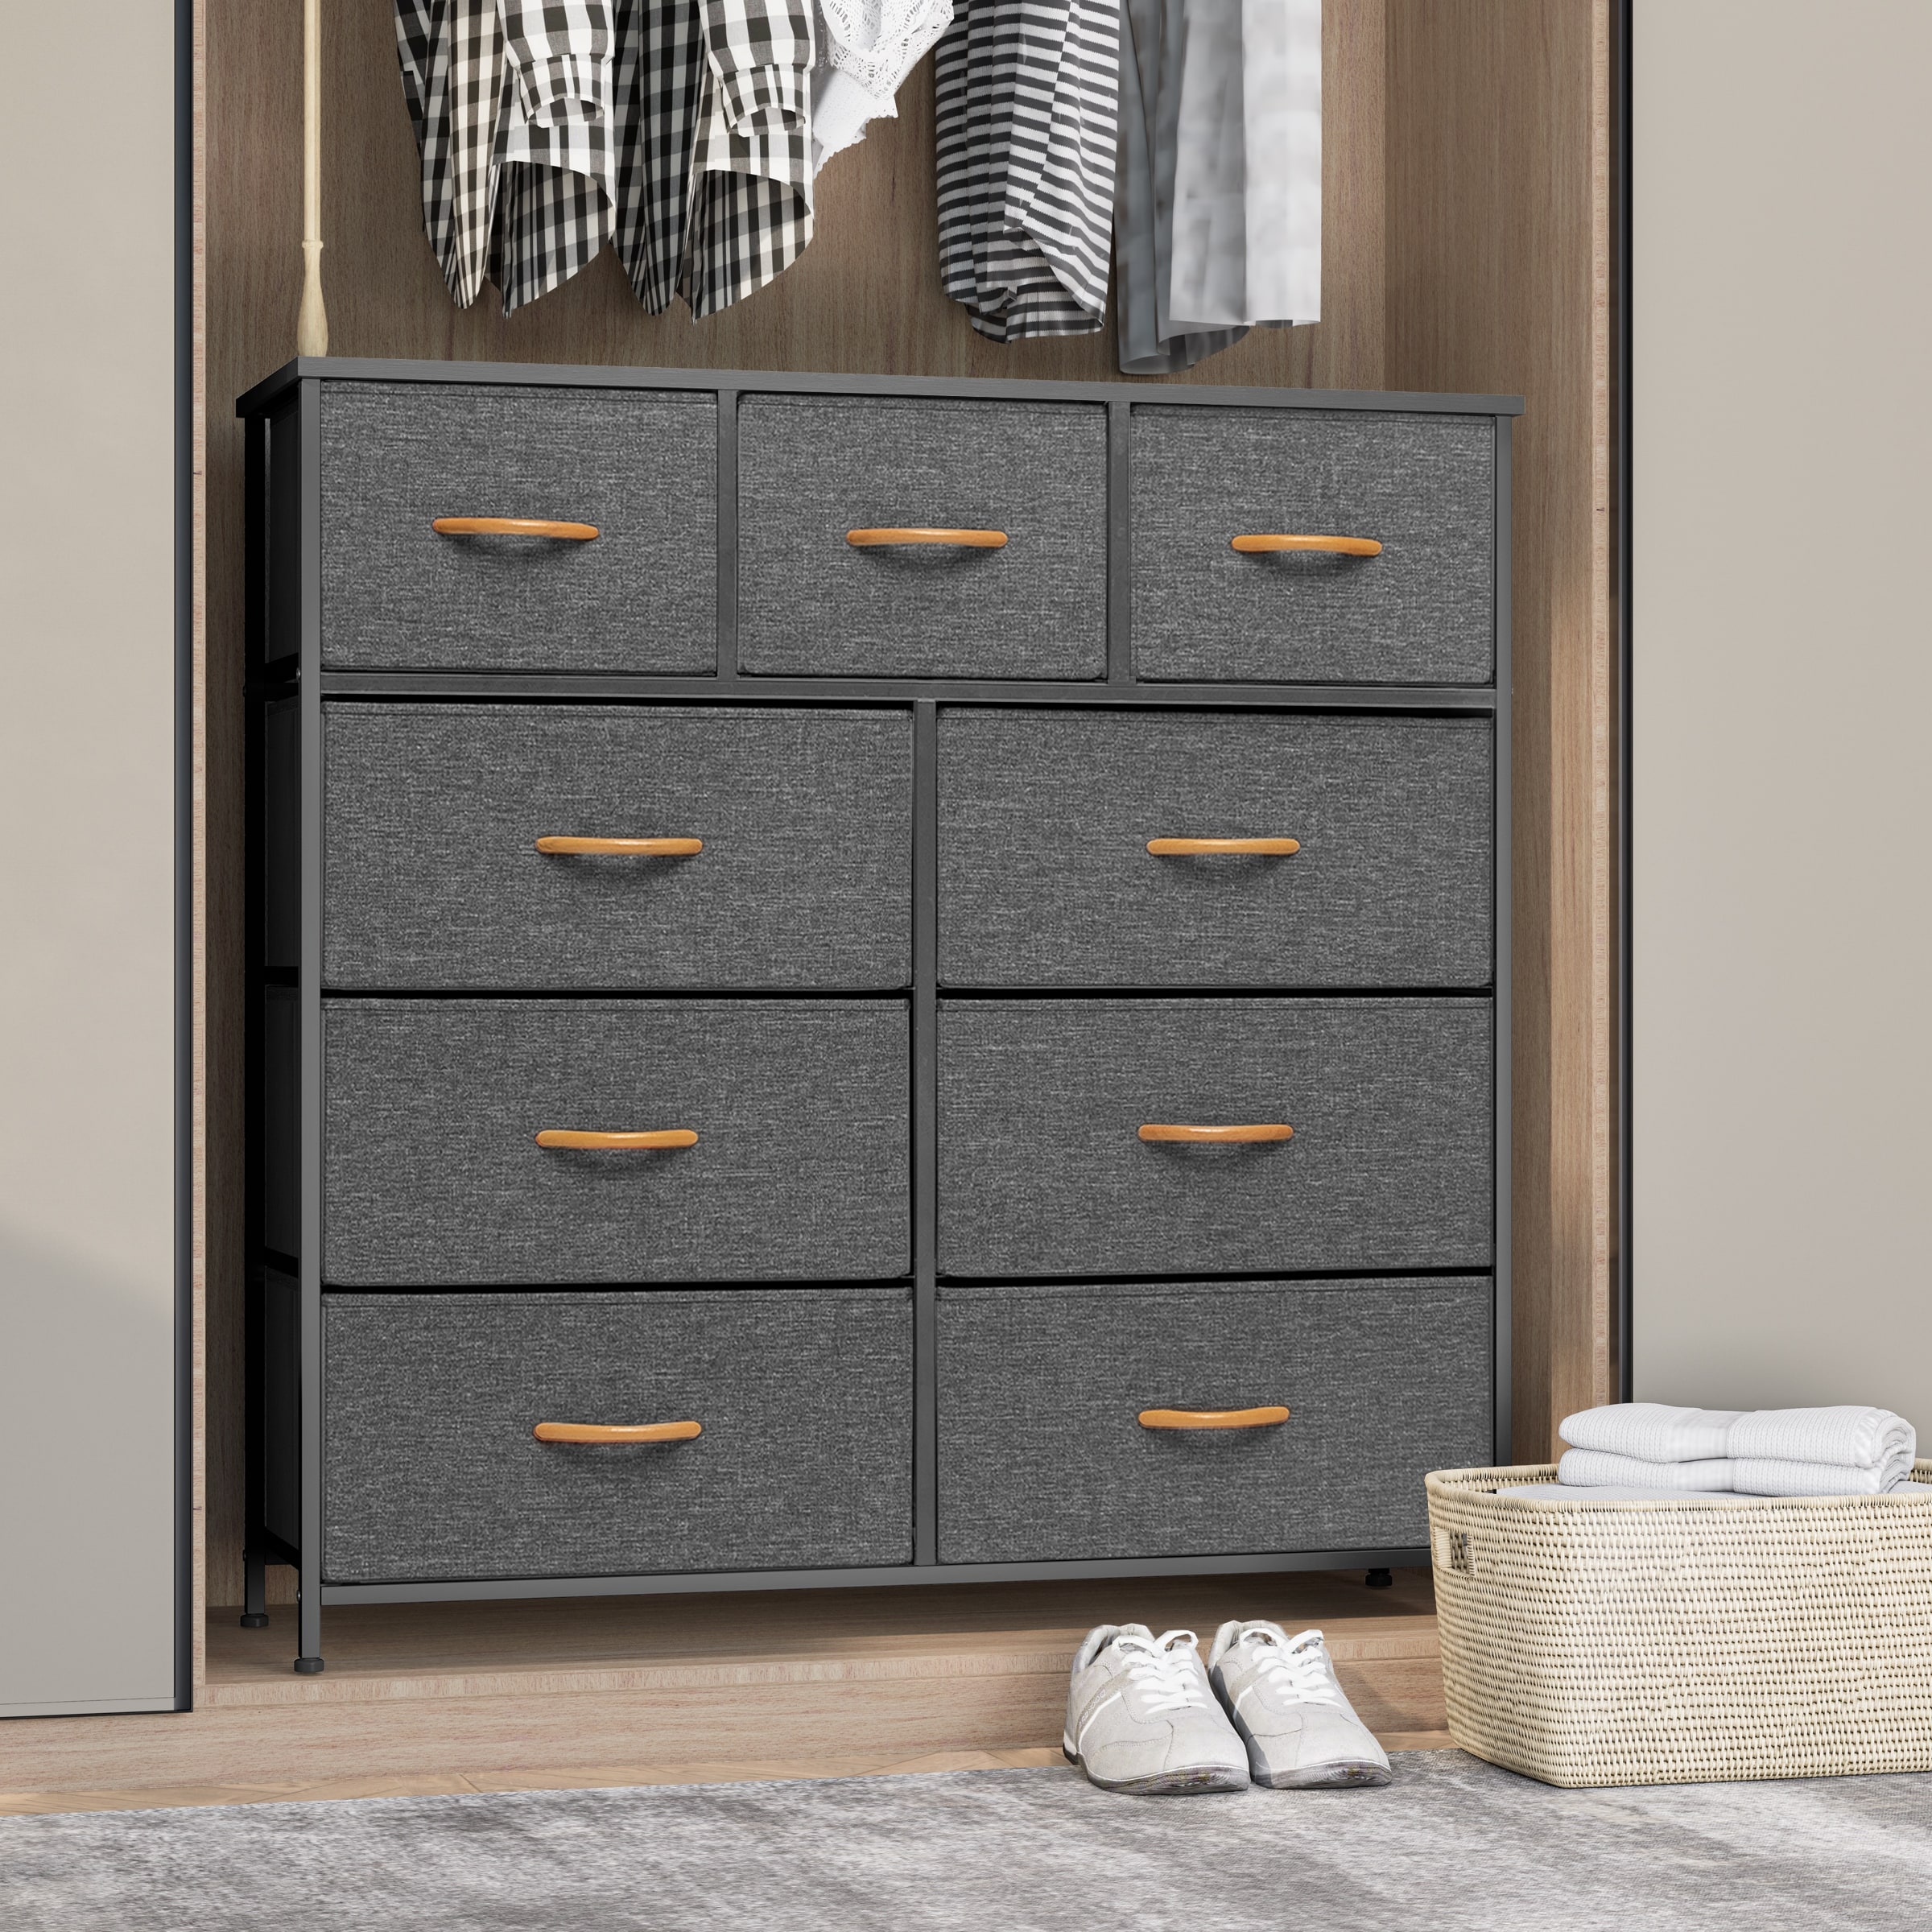 HOMCOM 7-Drawer Storage Cabinet Organizer Unit with Fabric Bins for Bedroom Dresser Closets Grey